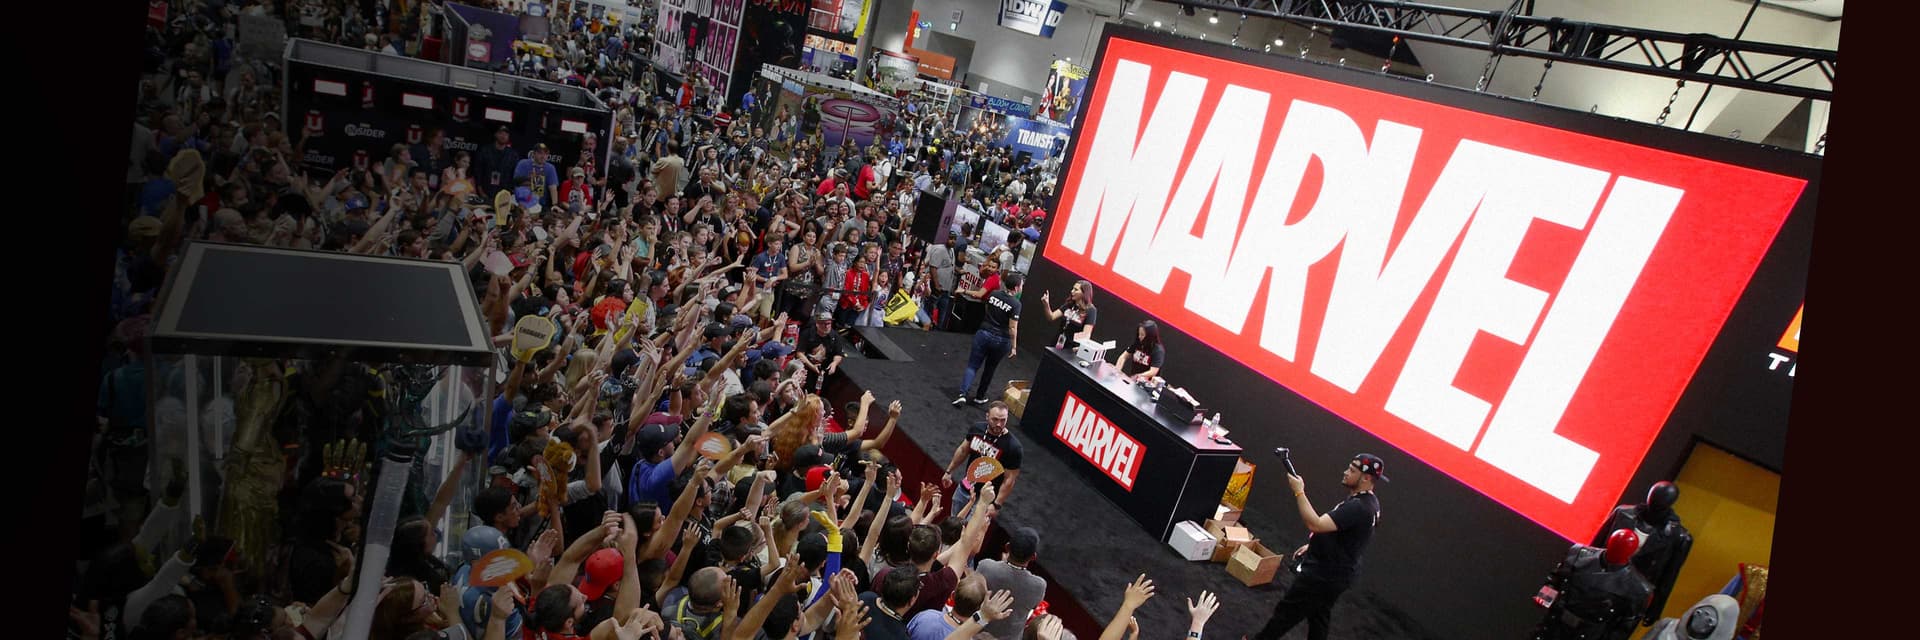 San Diego Comic-Con 2019 Marvel Live July 18-21